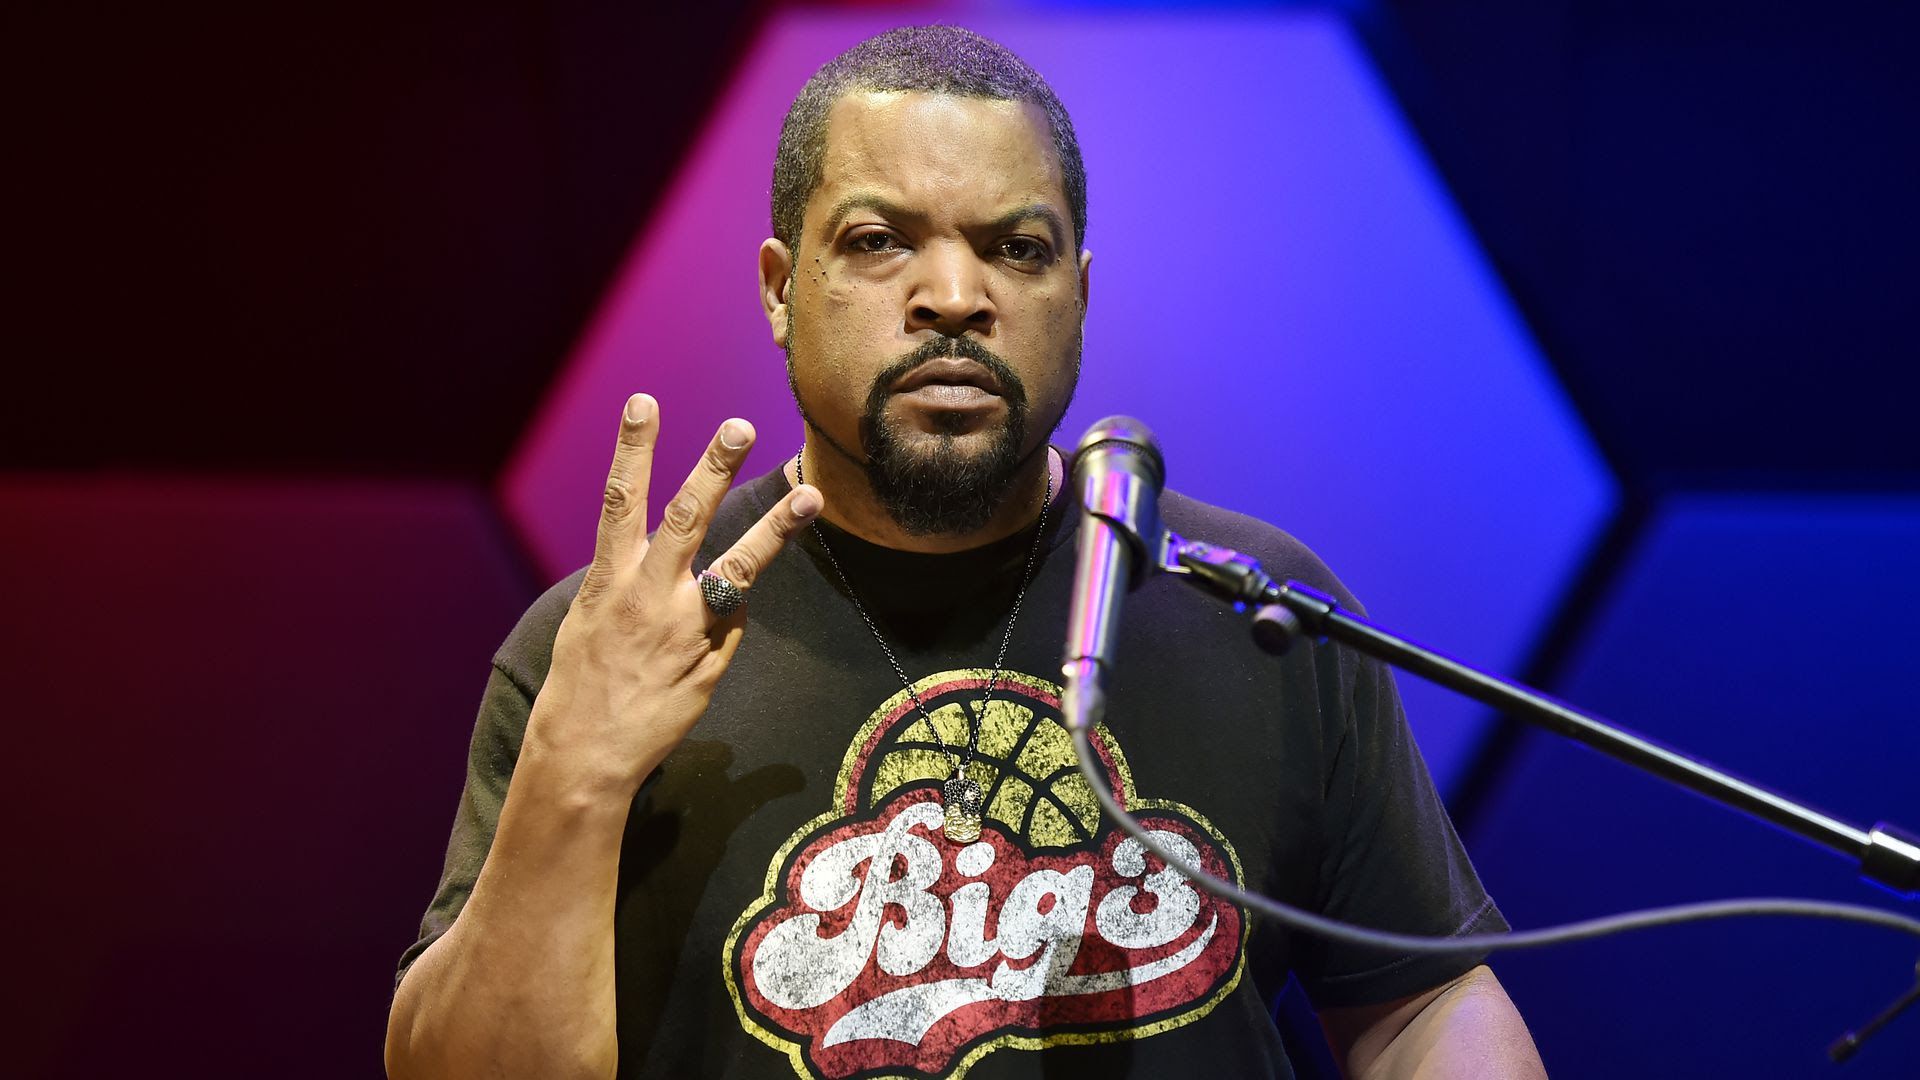 Ice Cube hopes his BIG3 basketball league can rejuvenate NBA careers